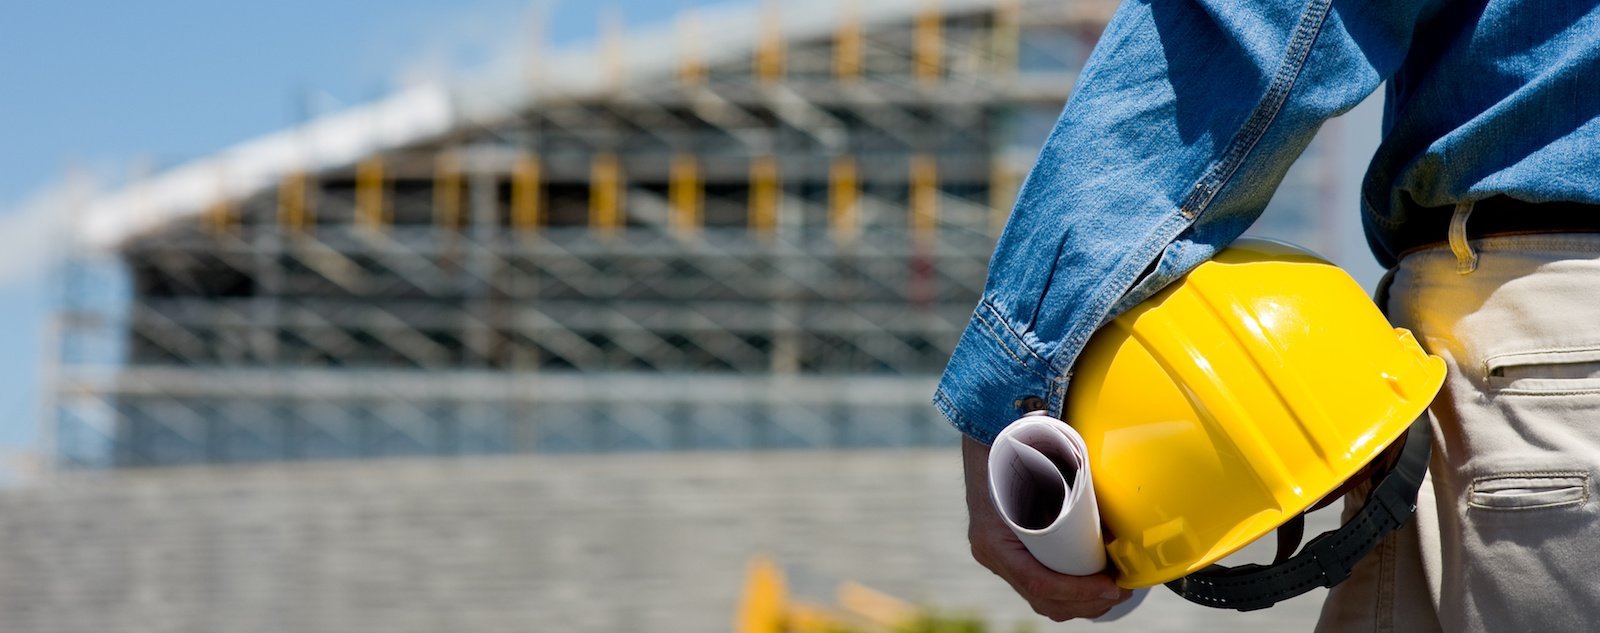 Kontroly celistvosti betónu v stavebníctve